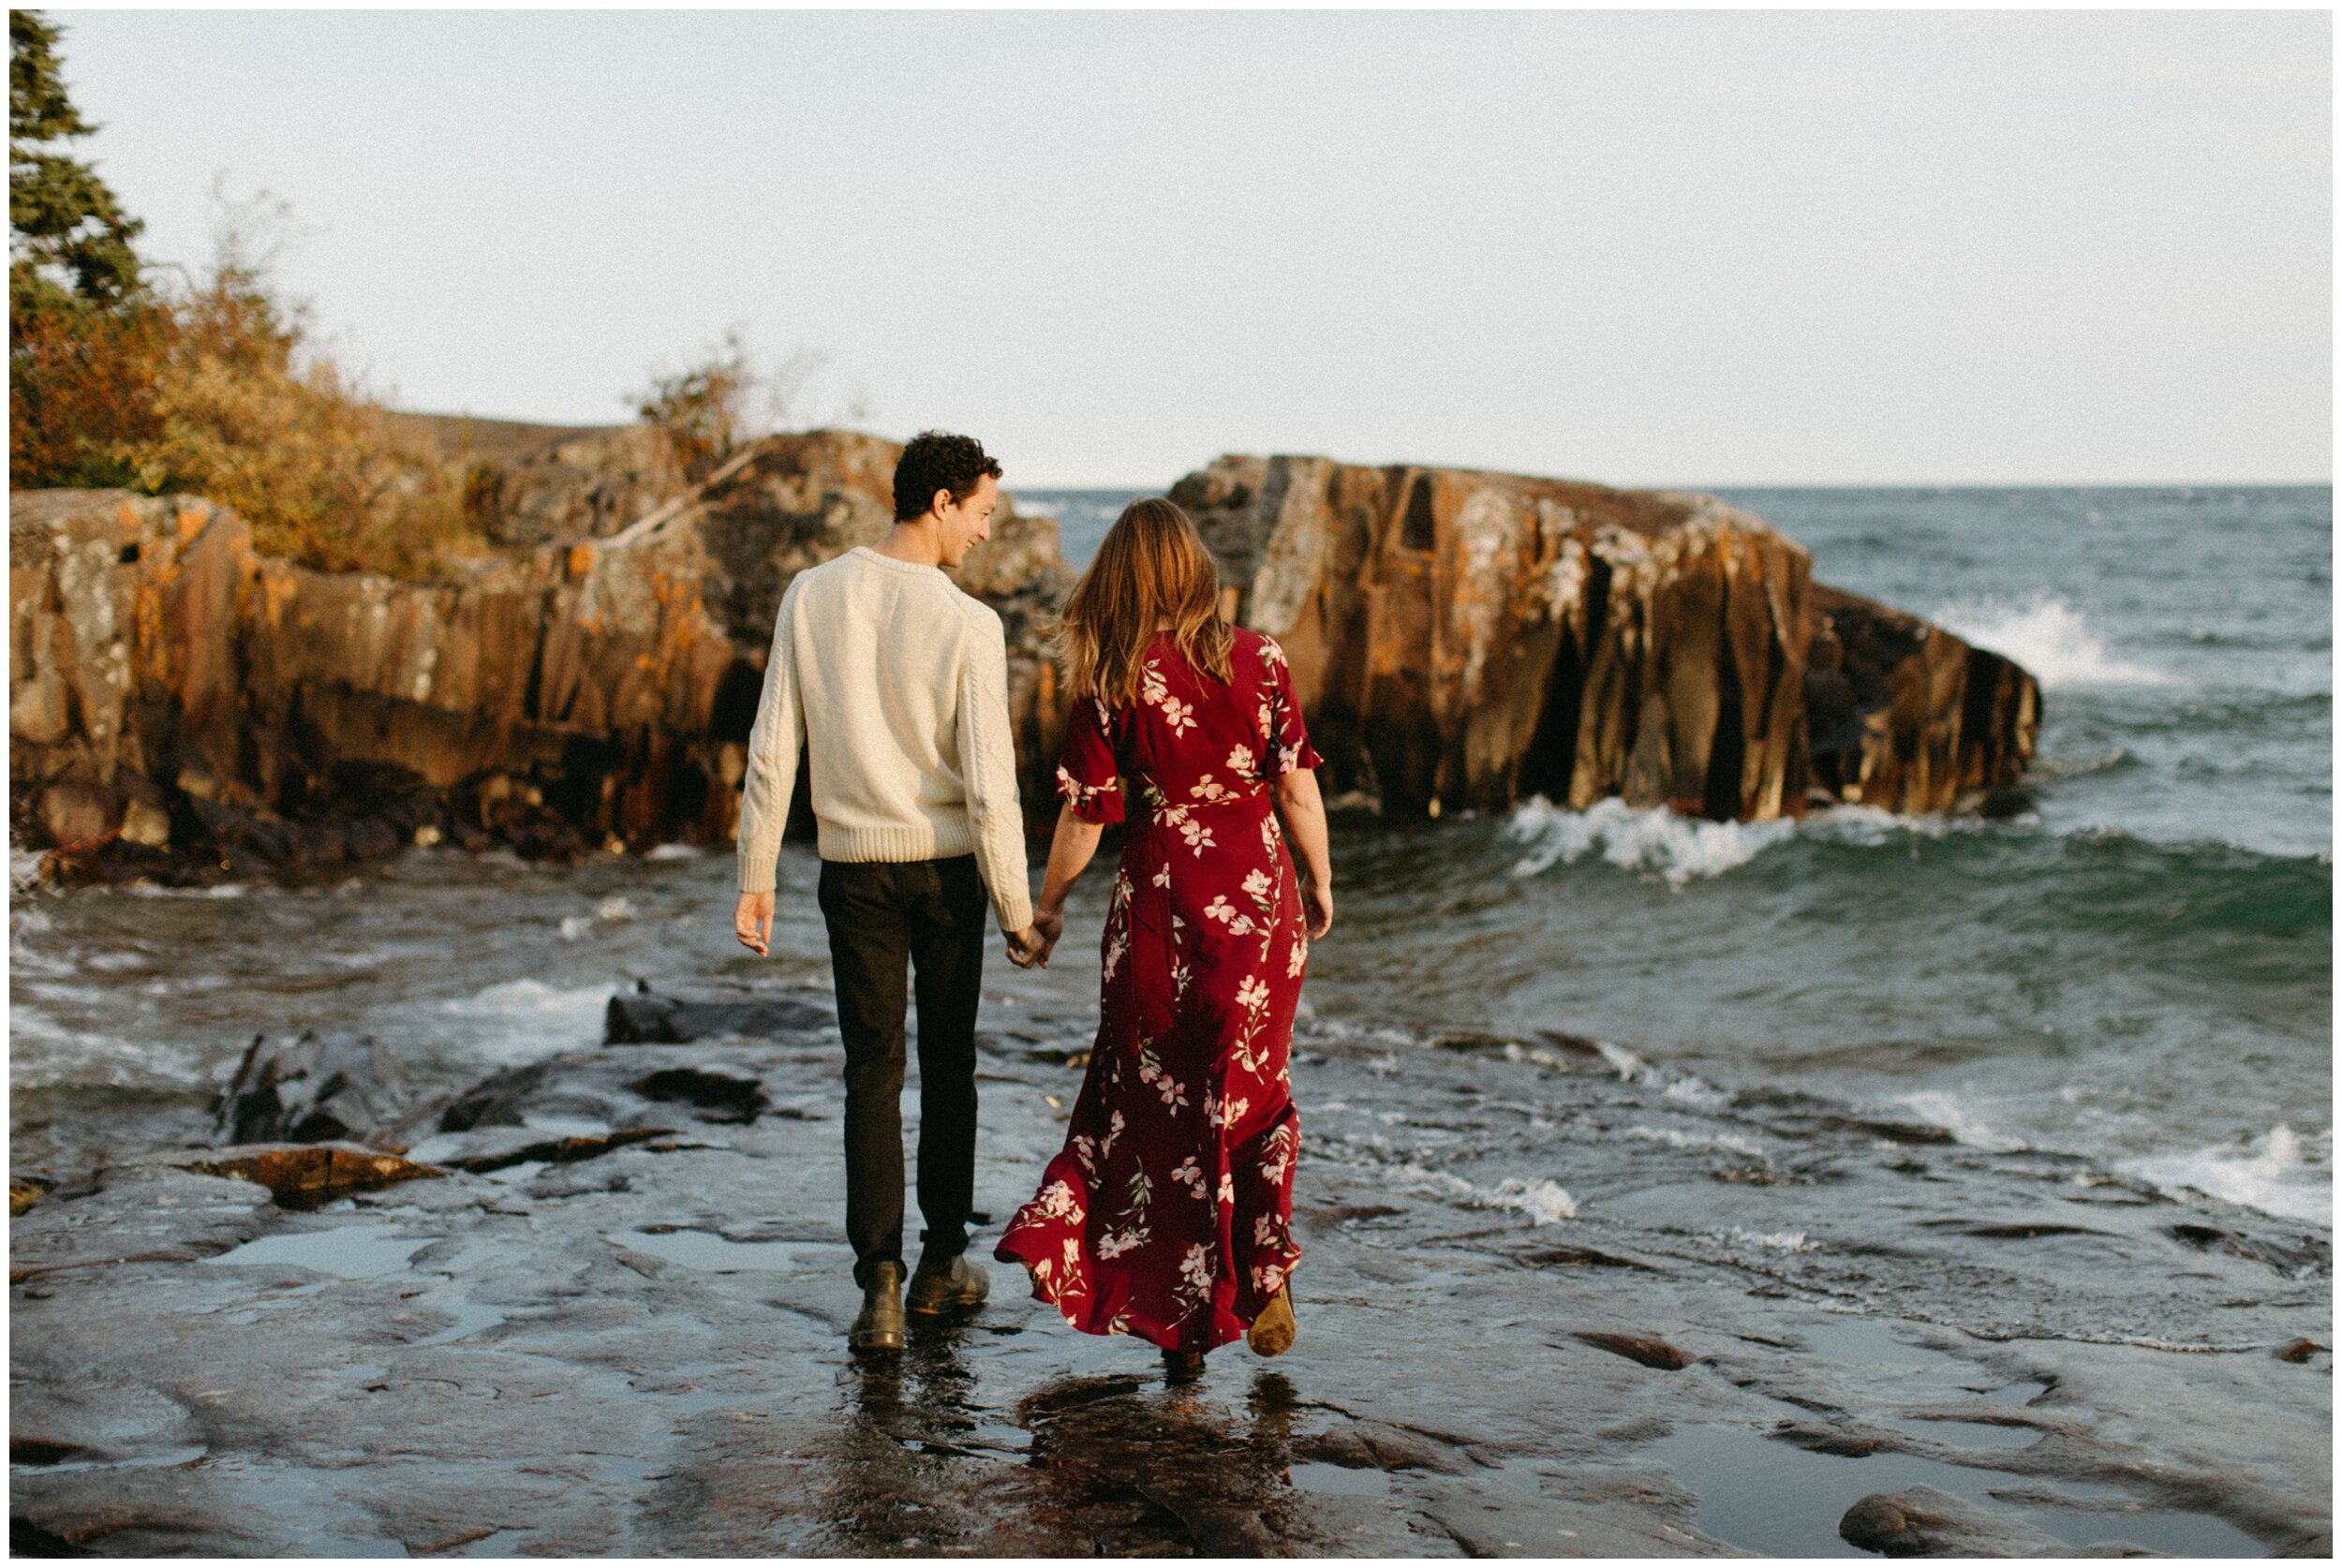 Grand Marais, MN engagement photography on the north shore of Lake Superior by wedding photographer Britt DeZeeuw